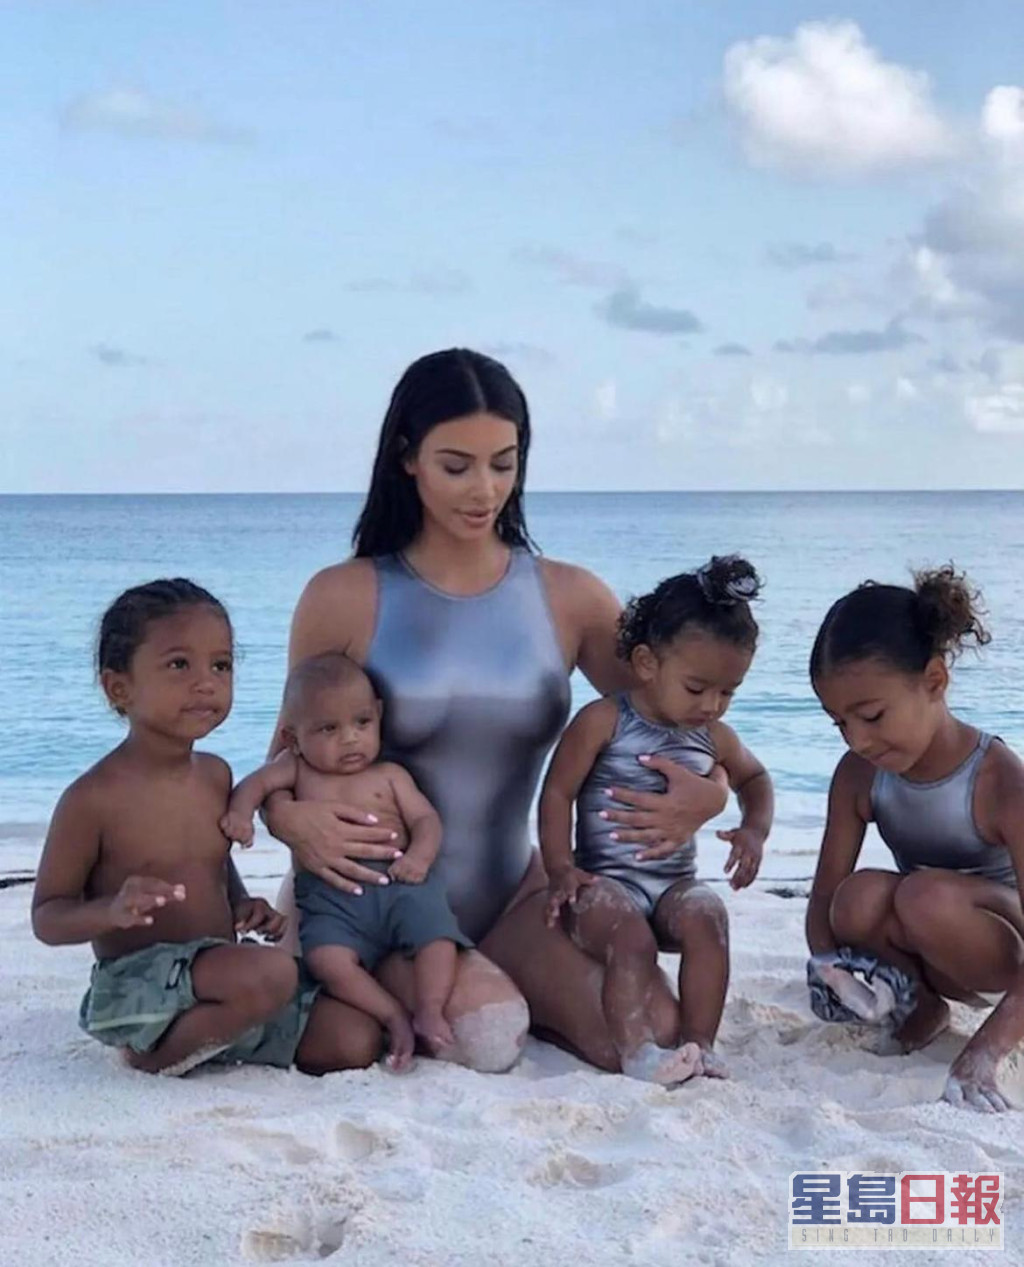 Kim與Kanye育有4名子女。